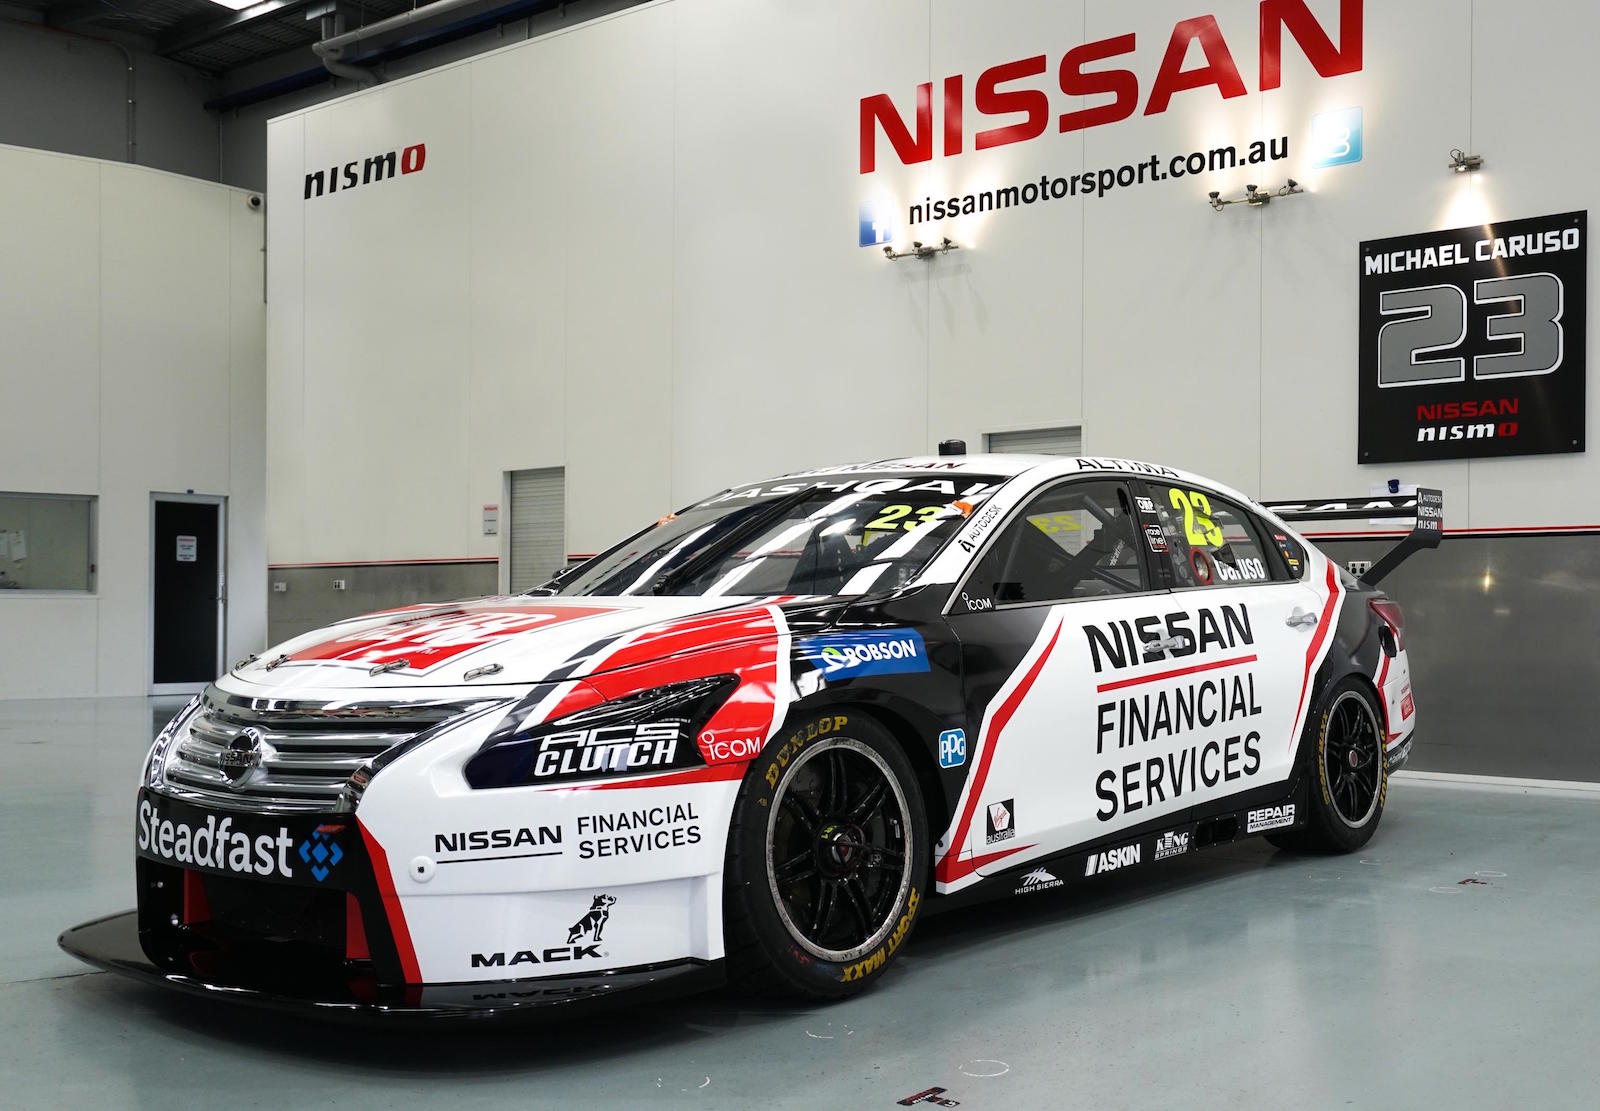 Nissan Australia confirms Australian Supercars exit after 2018